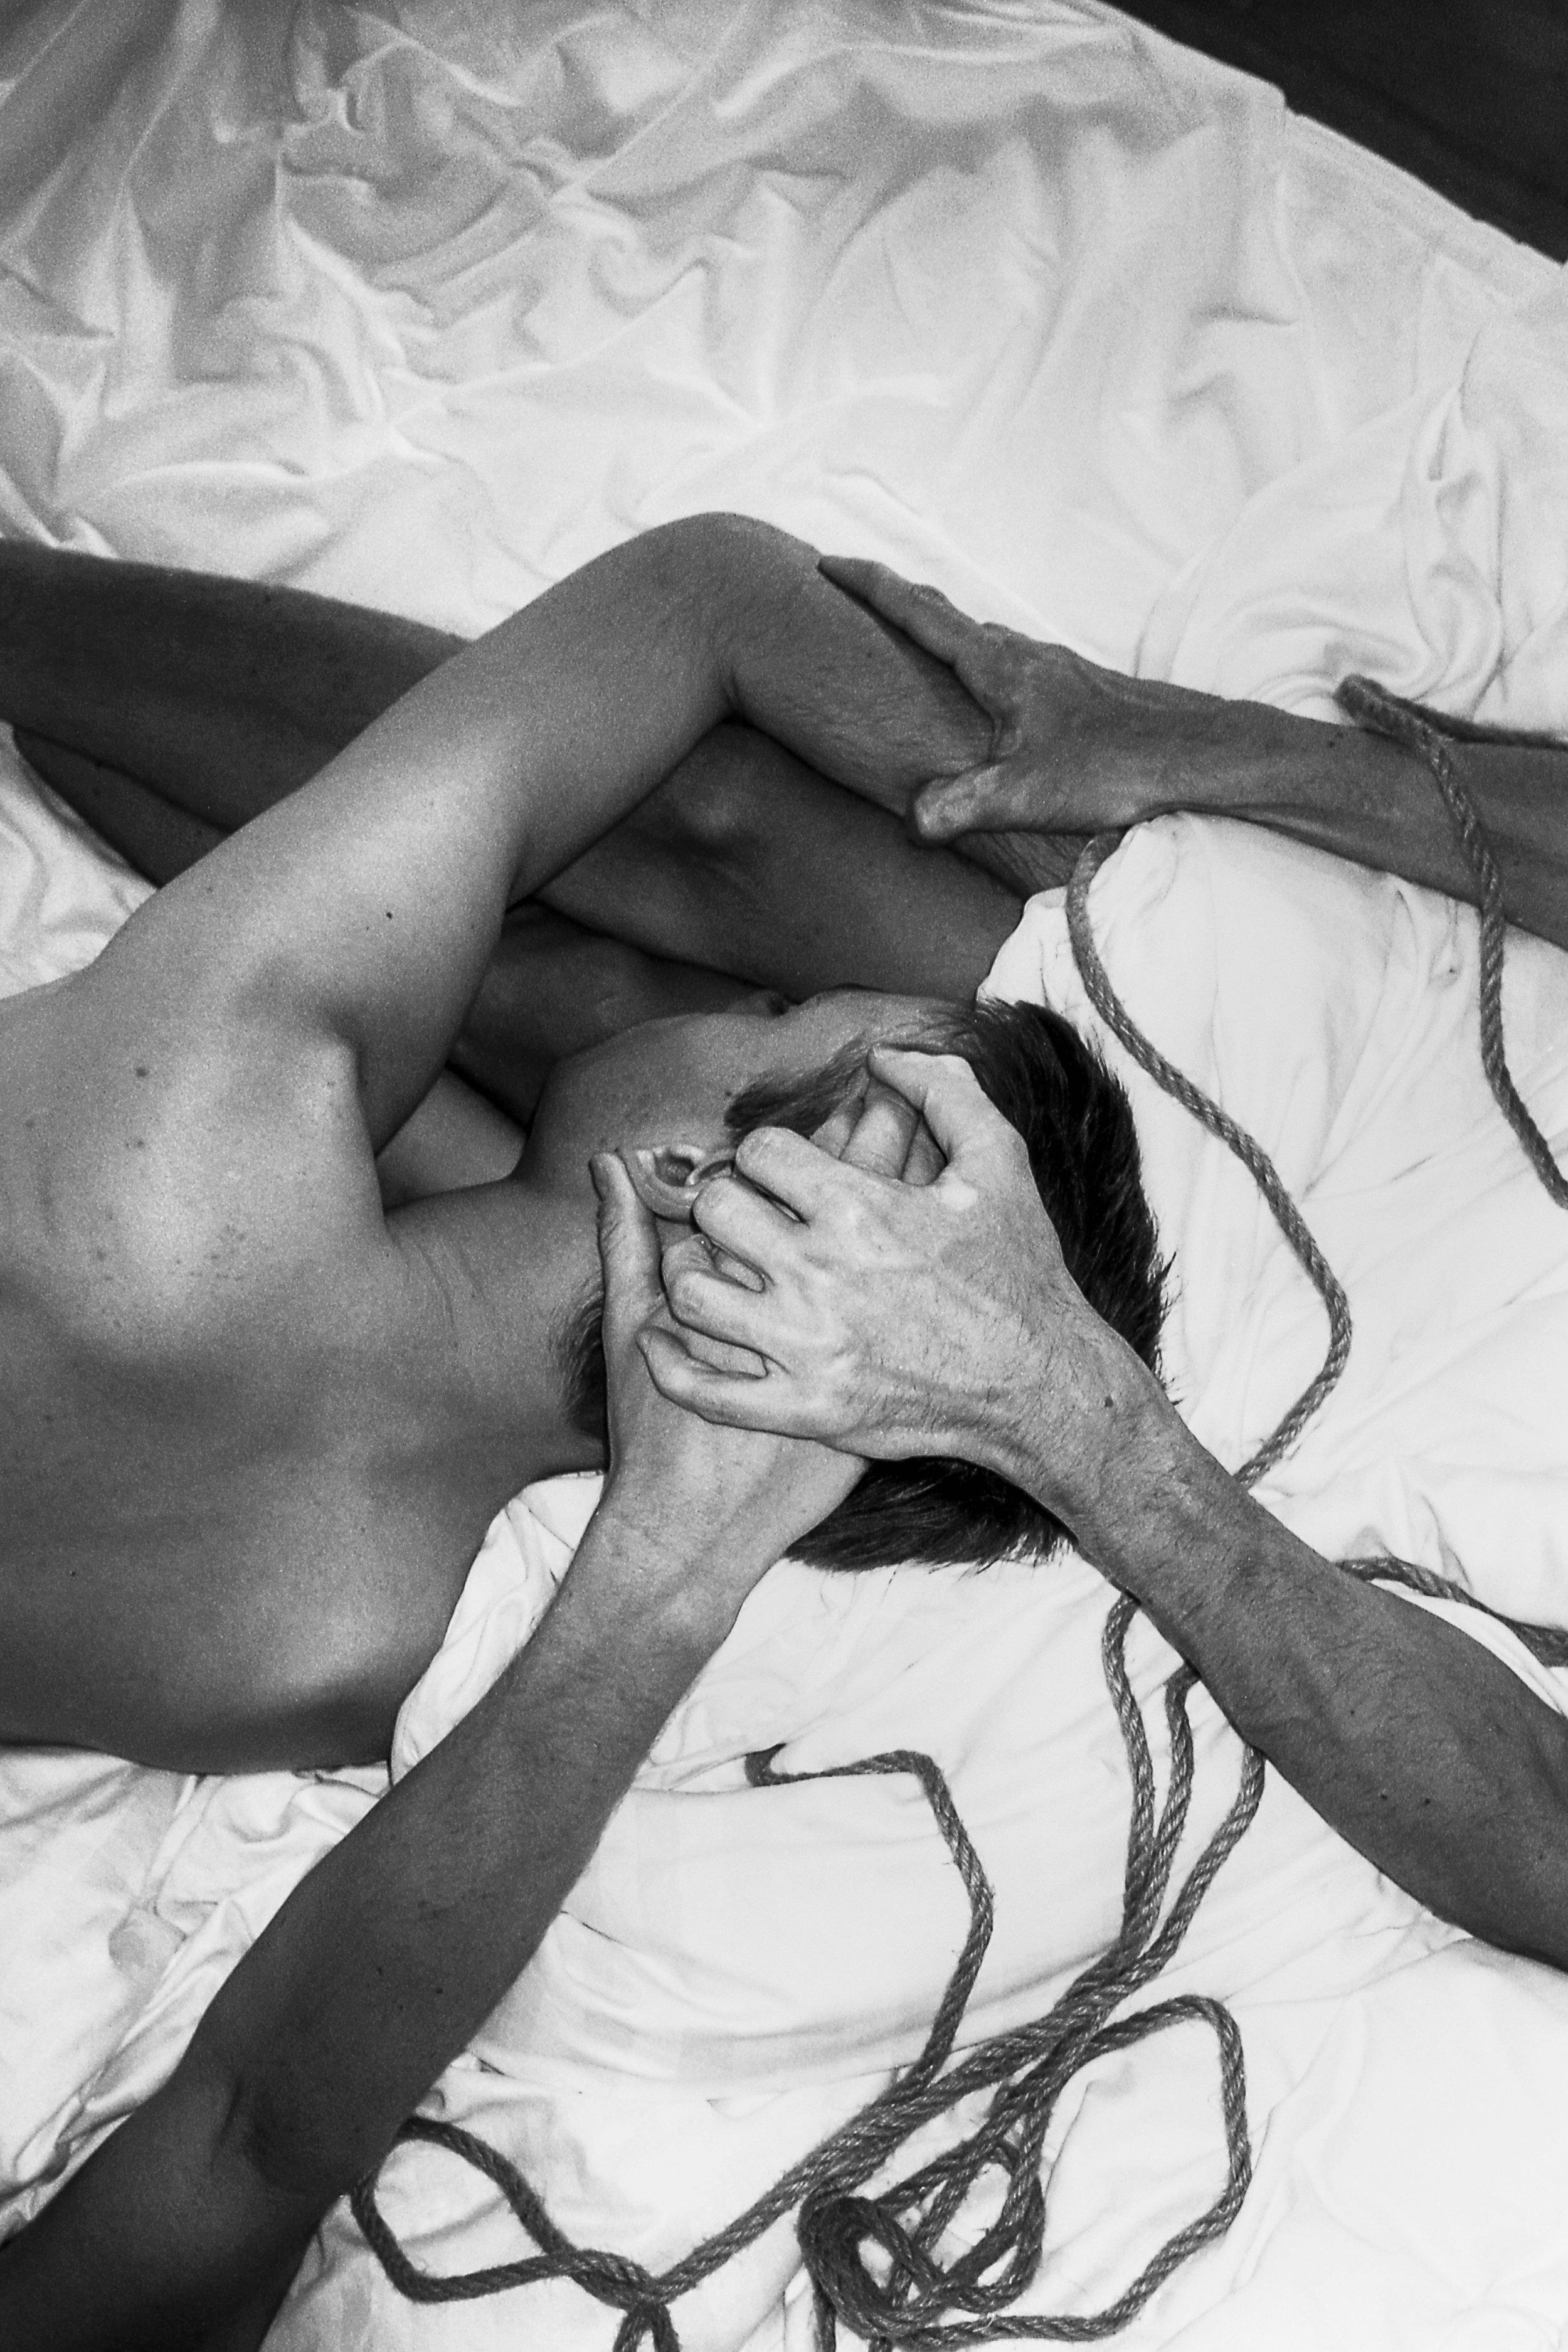 antoinette van zyl share sexual bondage black and white photos